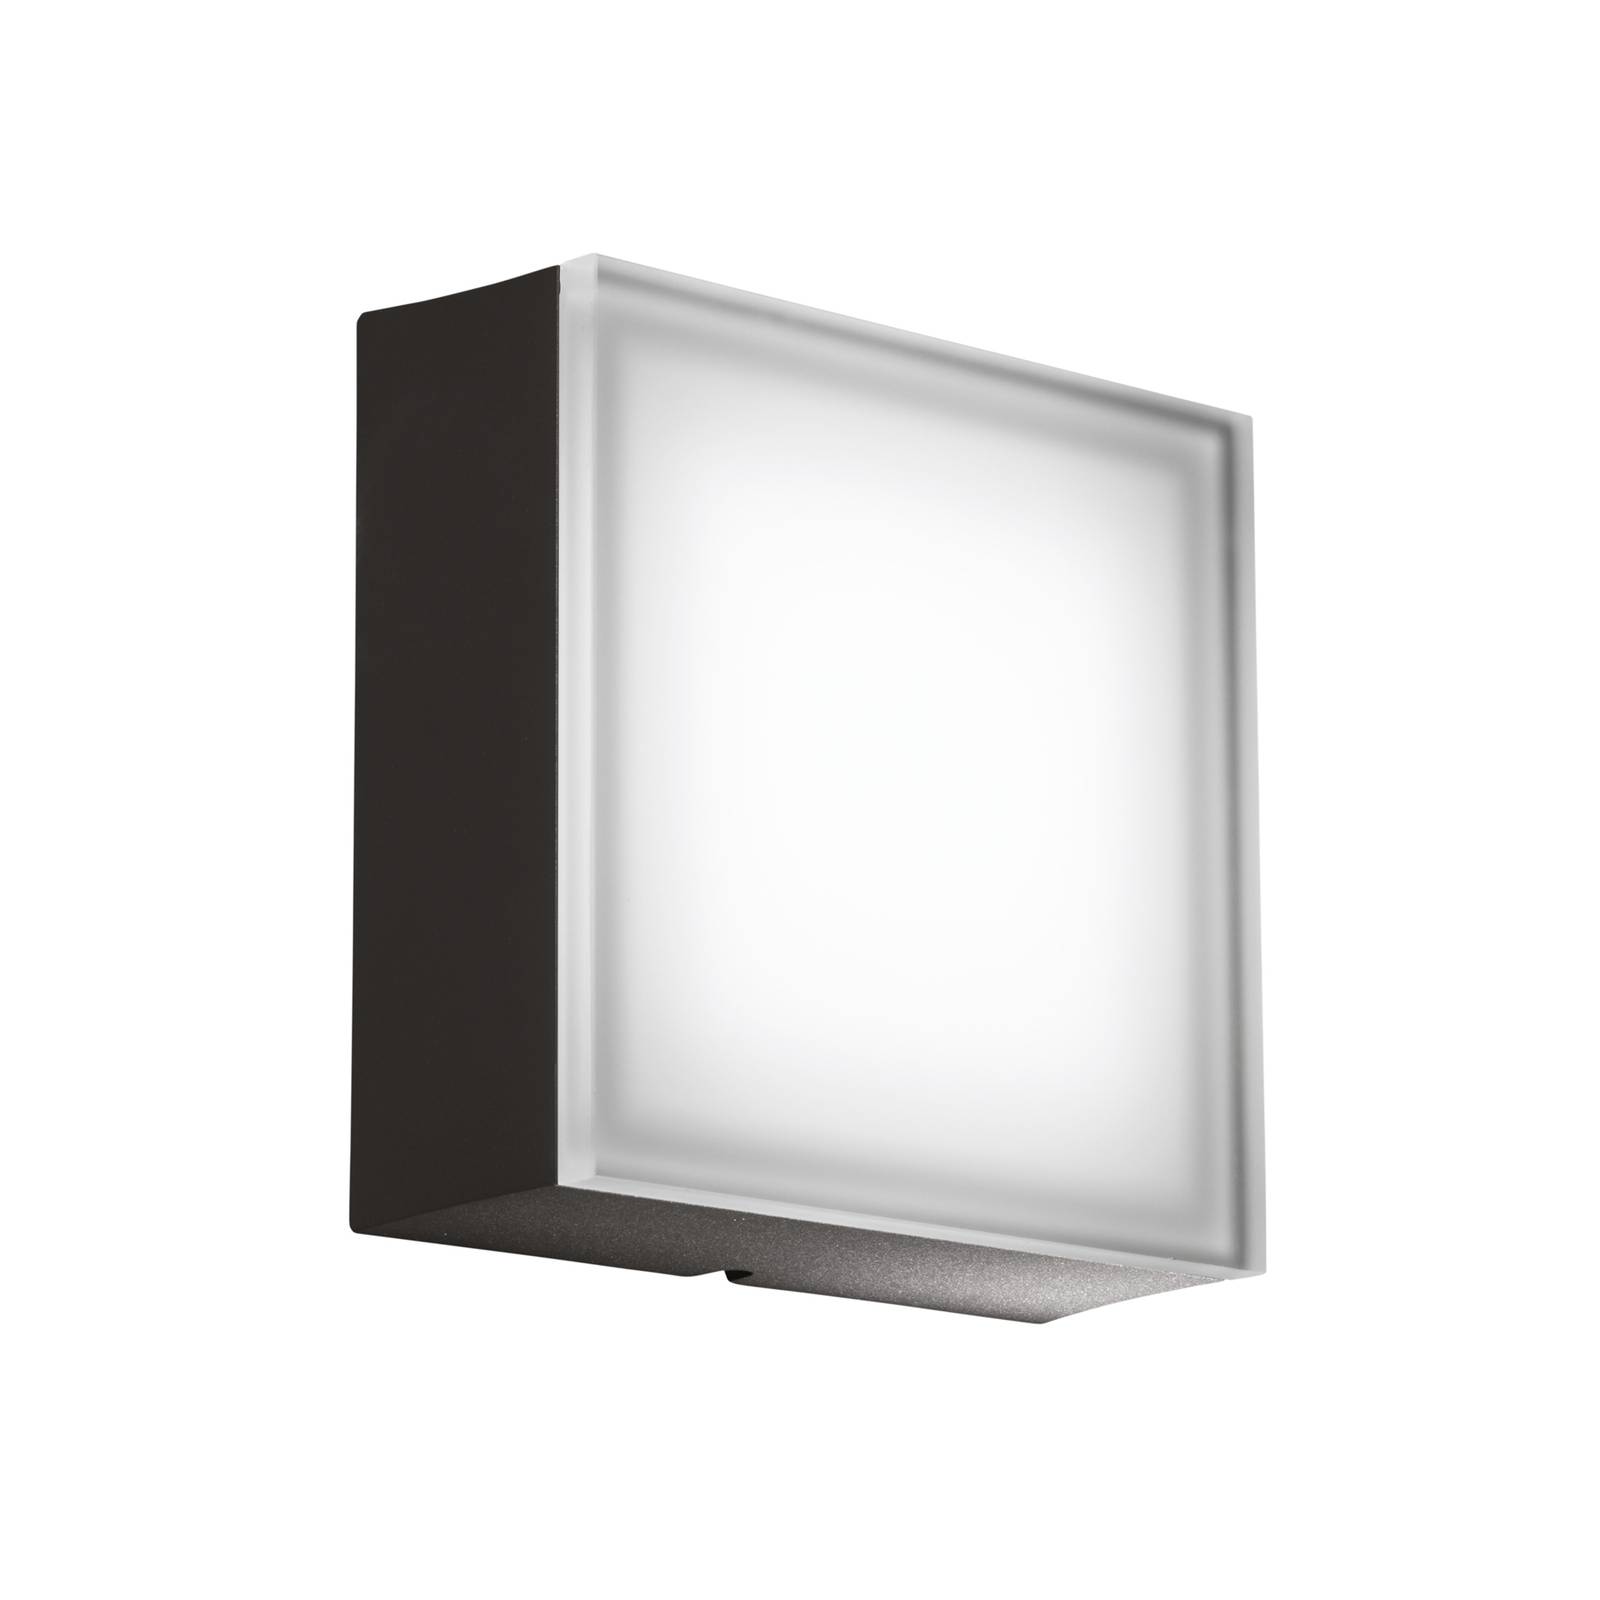 LCD LED-Außenwandlampe 1426 graphit 20 x 20 cm